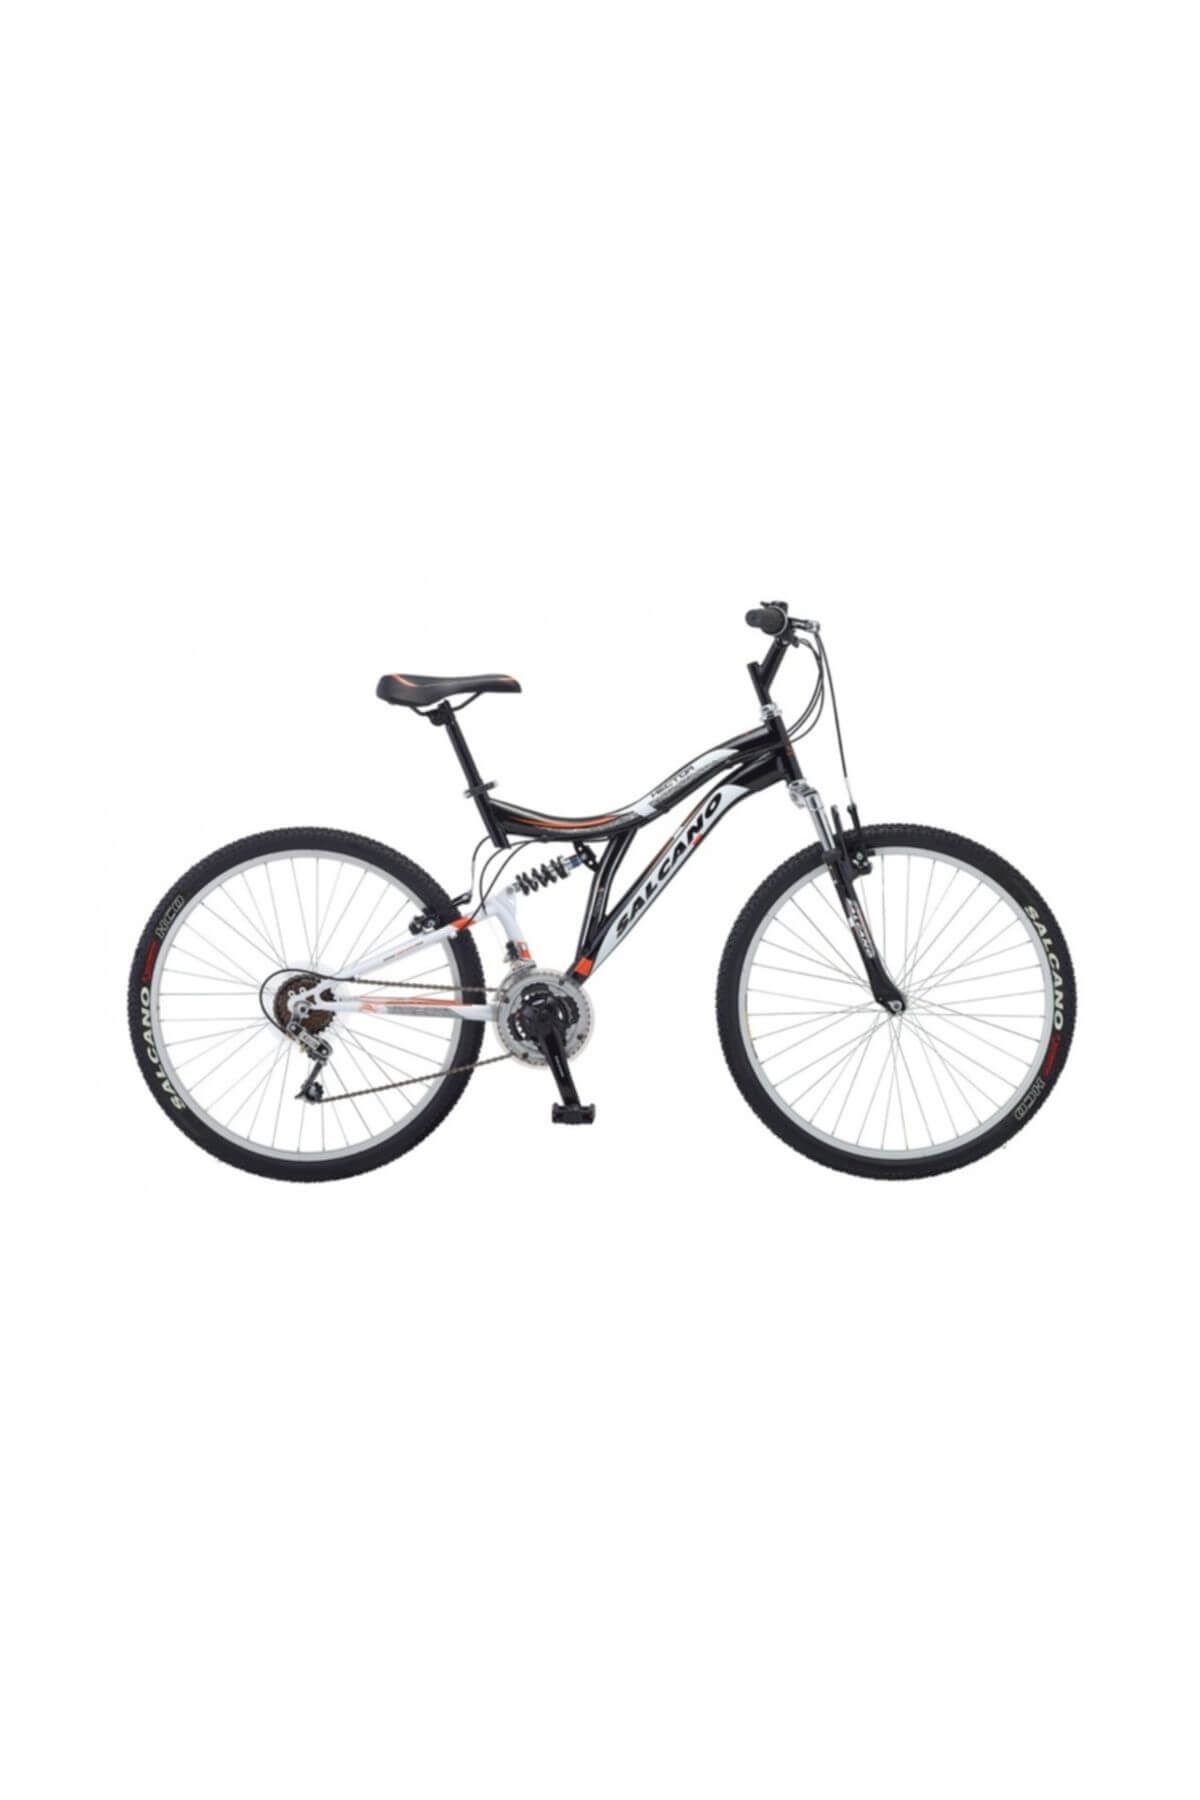 Salcano Hector V 21 Vites 26 Jant Bisiklet 2018 Model 780 Siyah Kırmızı Beyaz